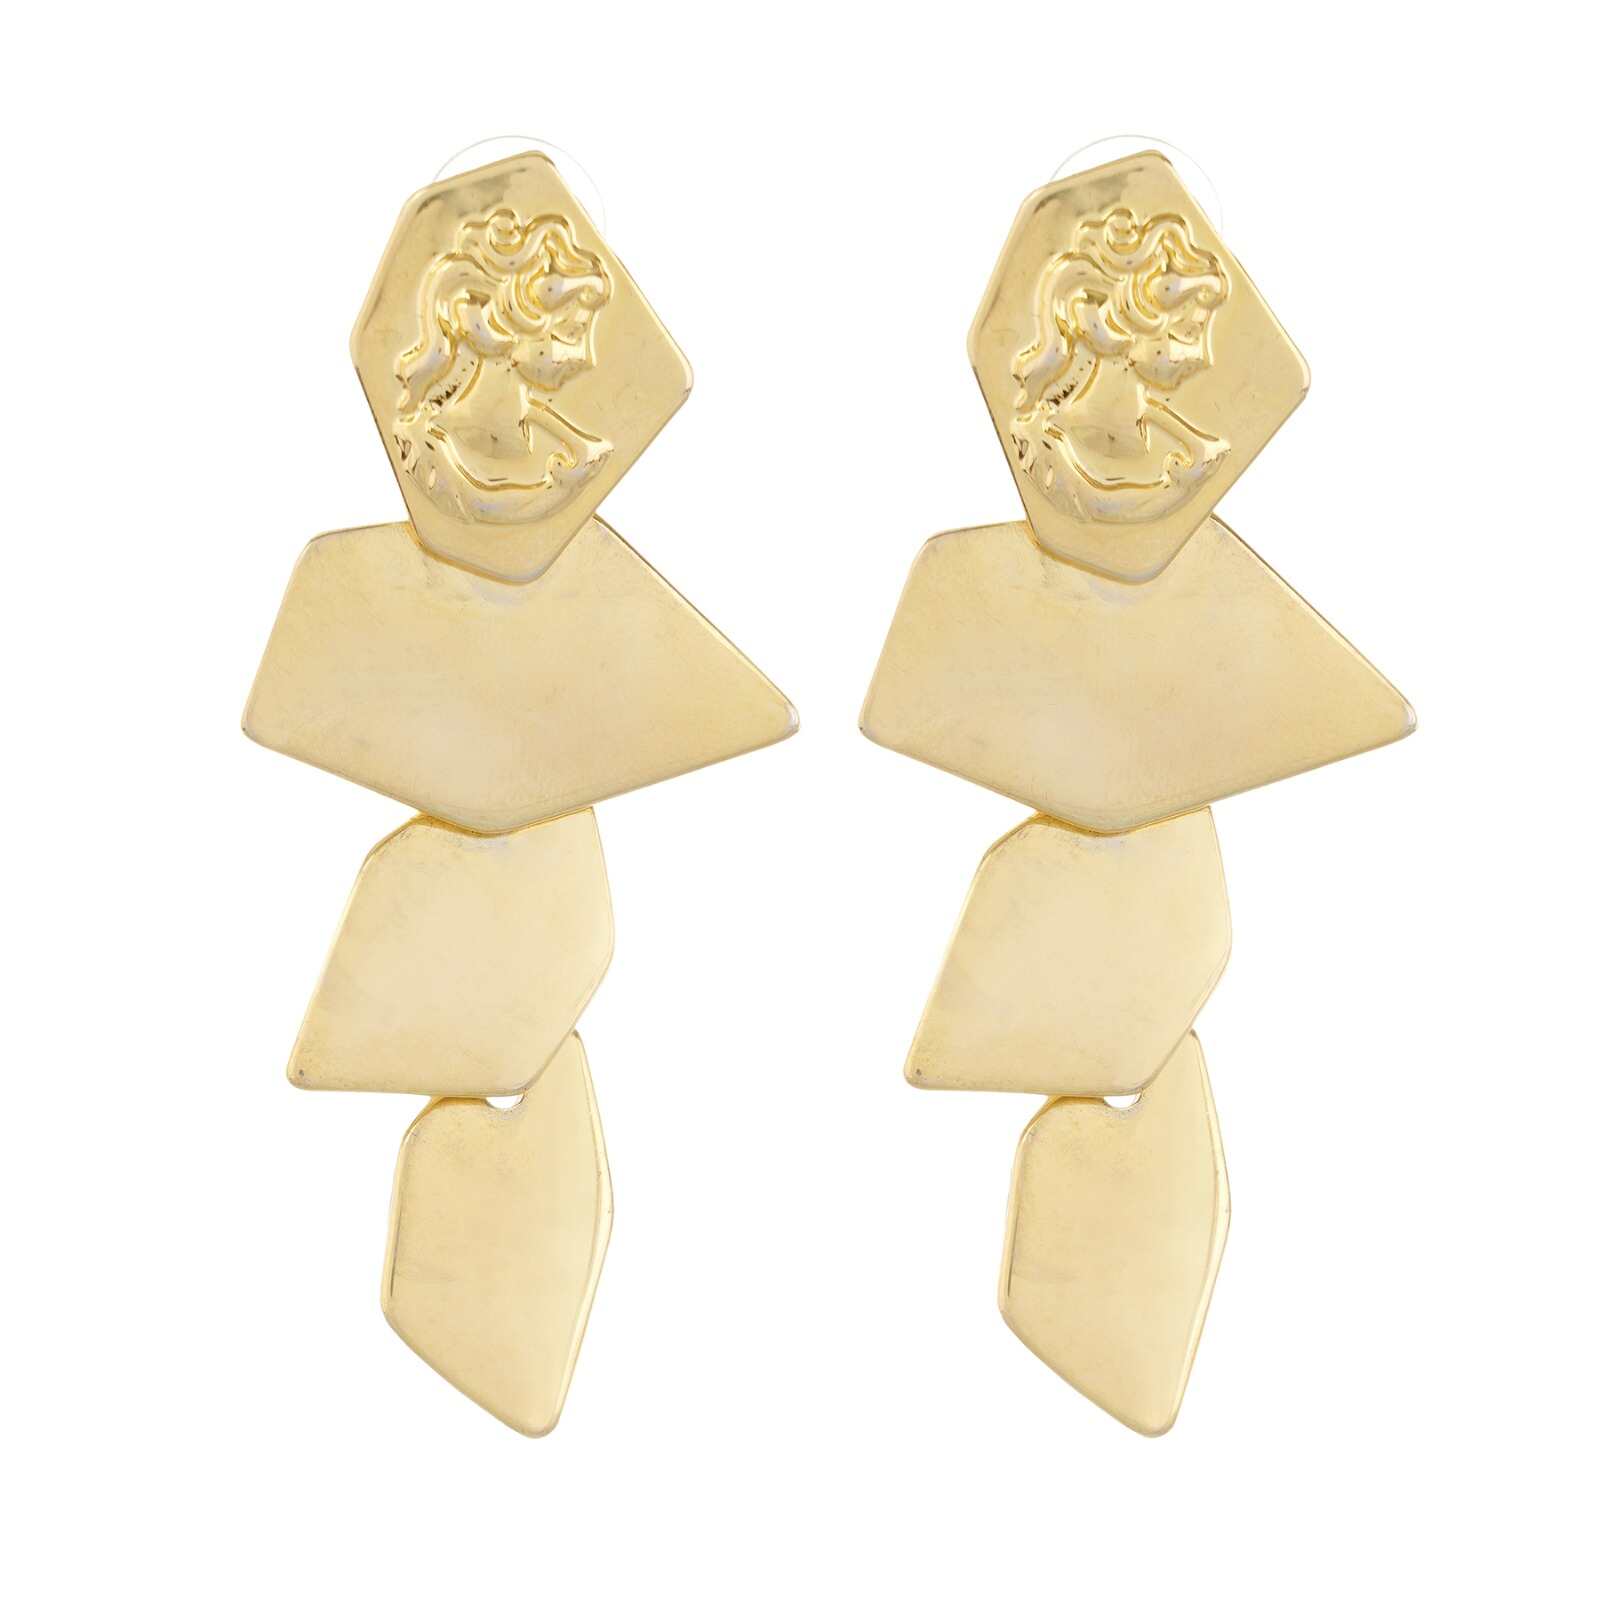 Wholesaler of 916 gold everstylish hallmark cz earring | Jewelxy - 164221